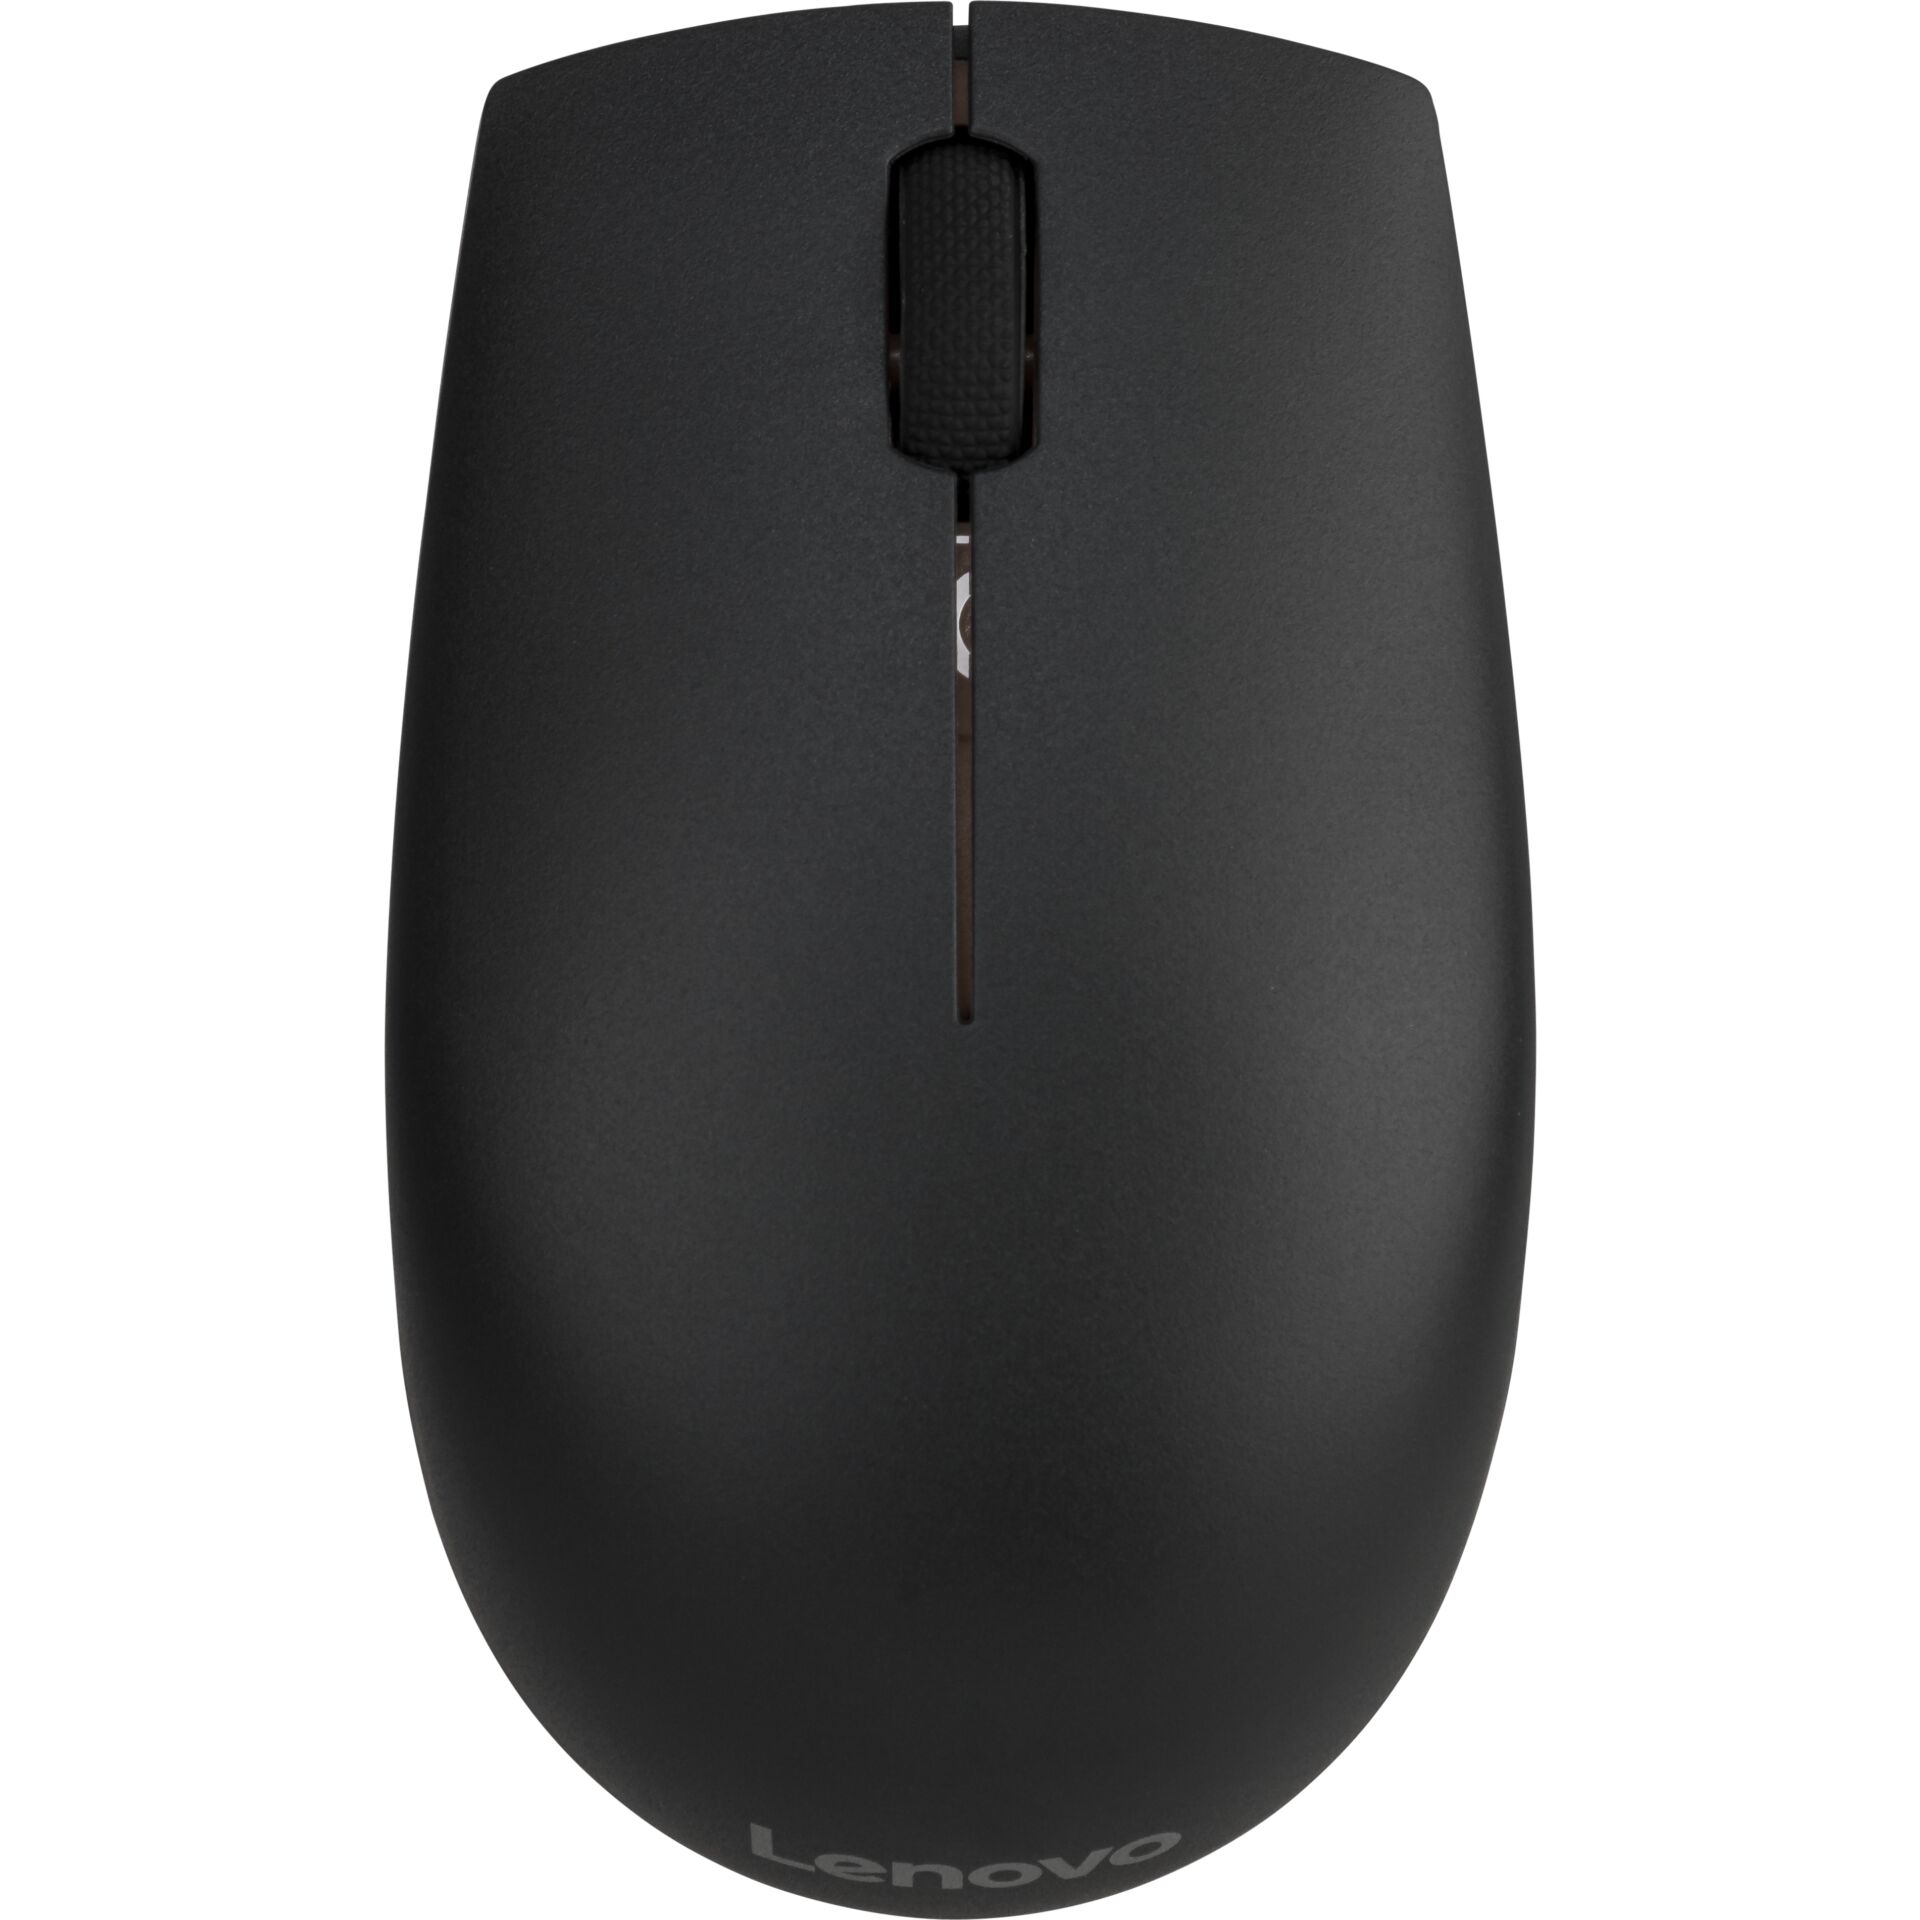 Lenovo 300 wireless mouse black